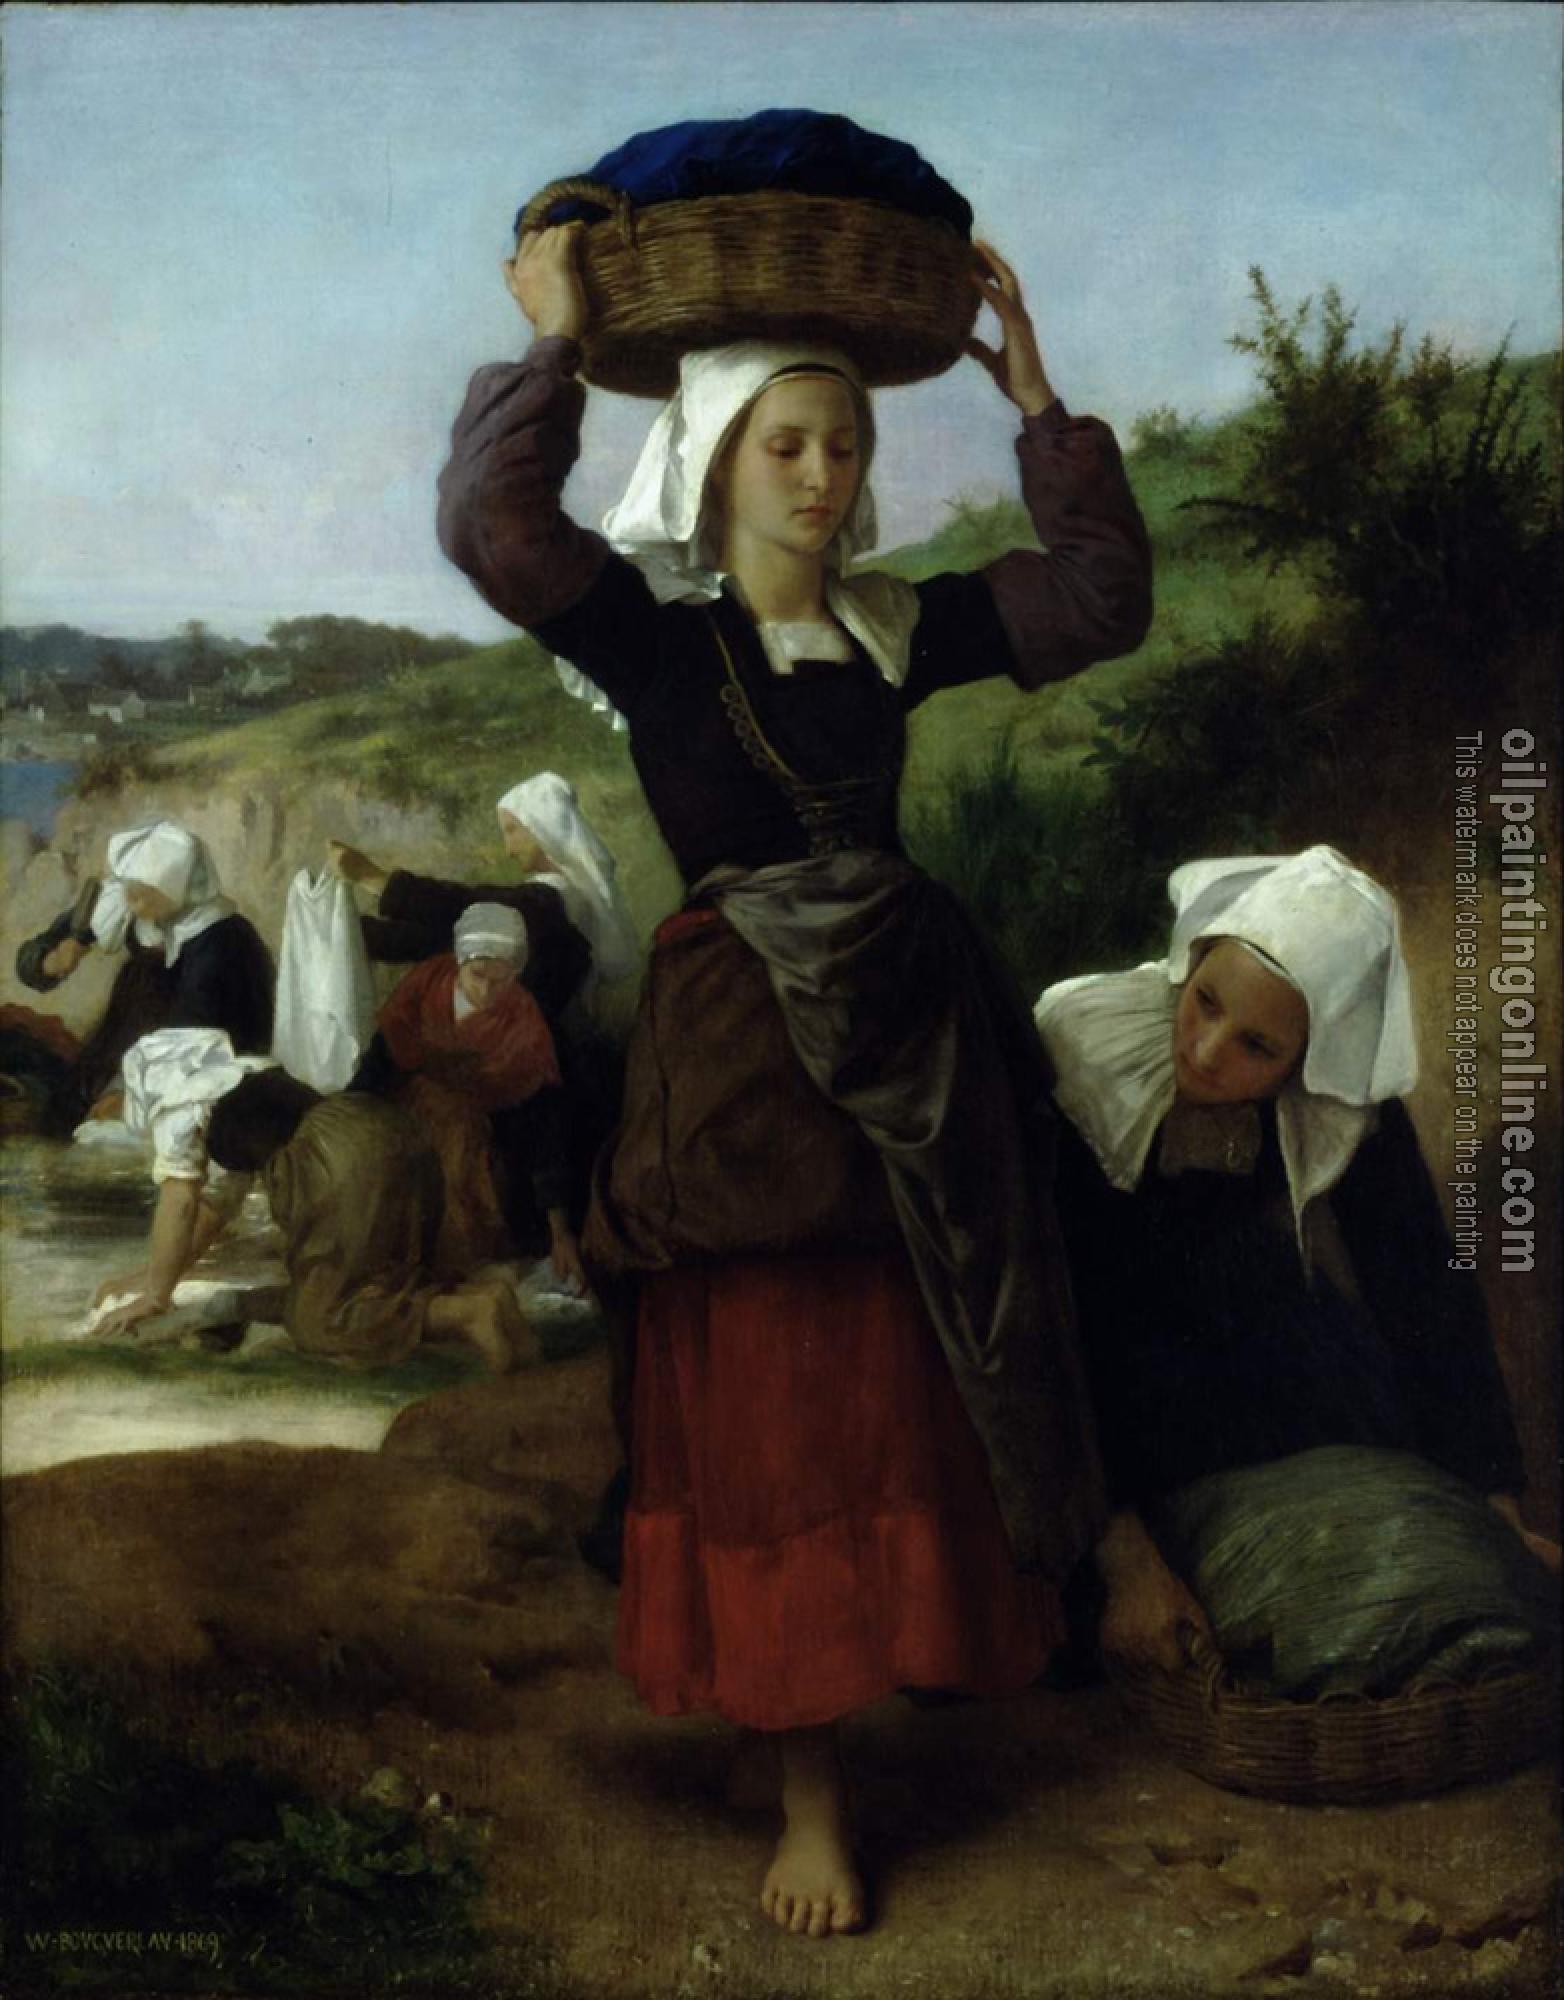 Bouguereau, William-Adolphe - Washerwomen of Fouesnant